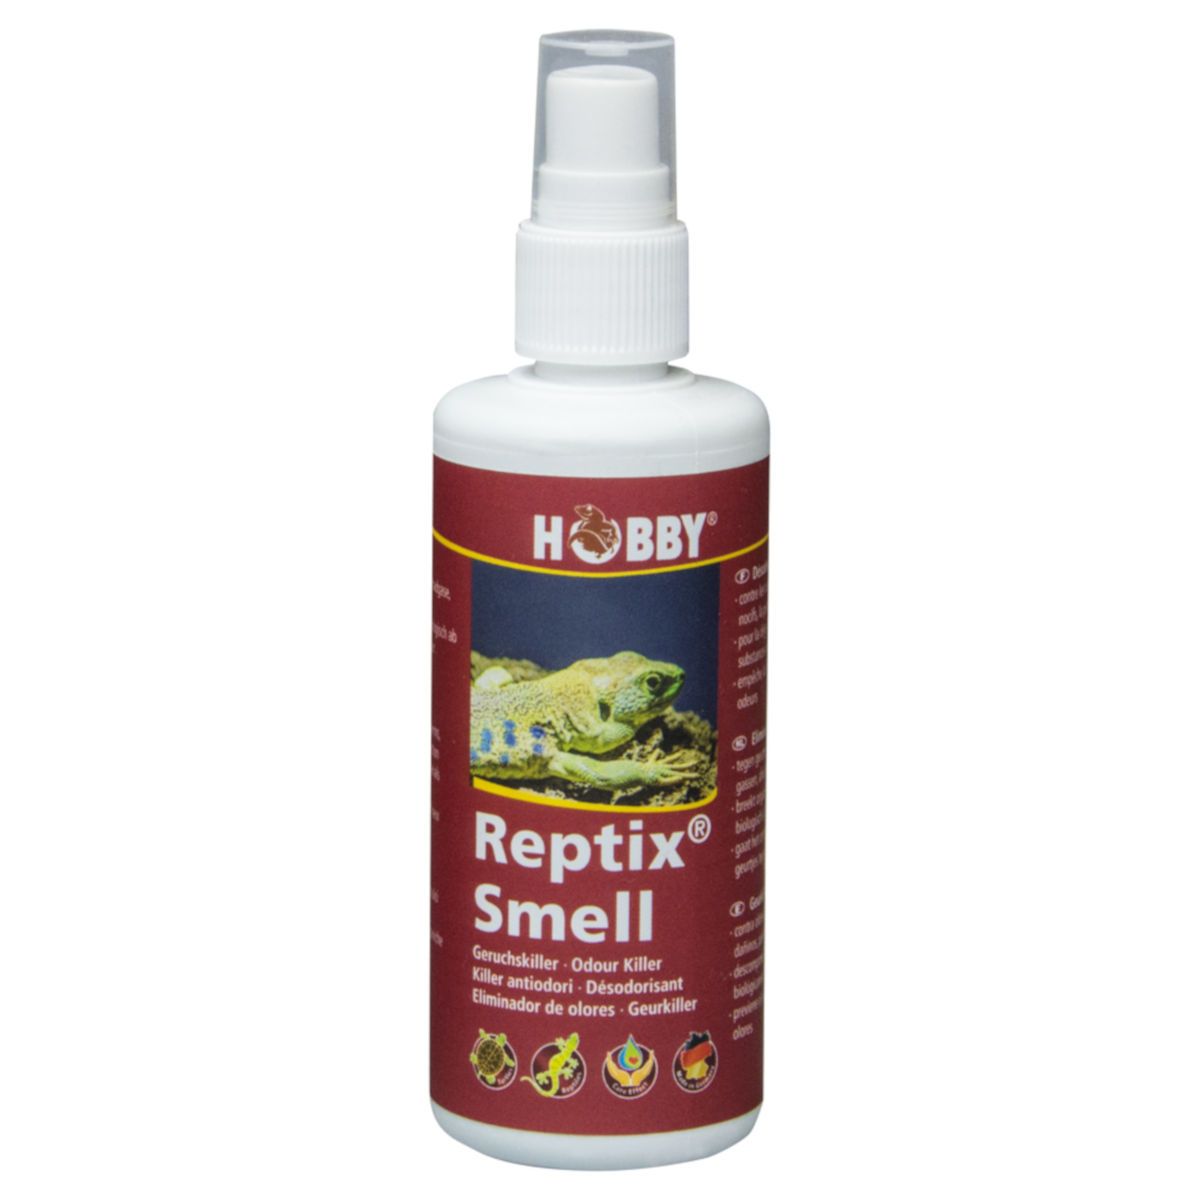 Hobby Reptix Smell, Geruchskiller